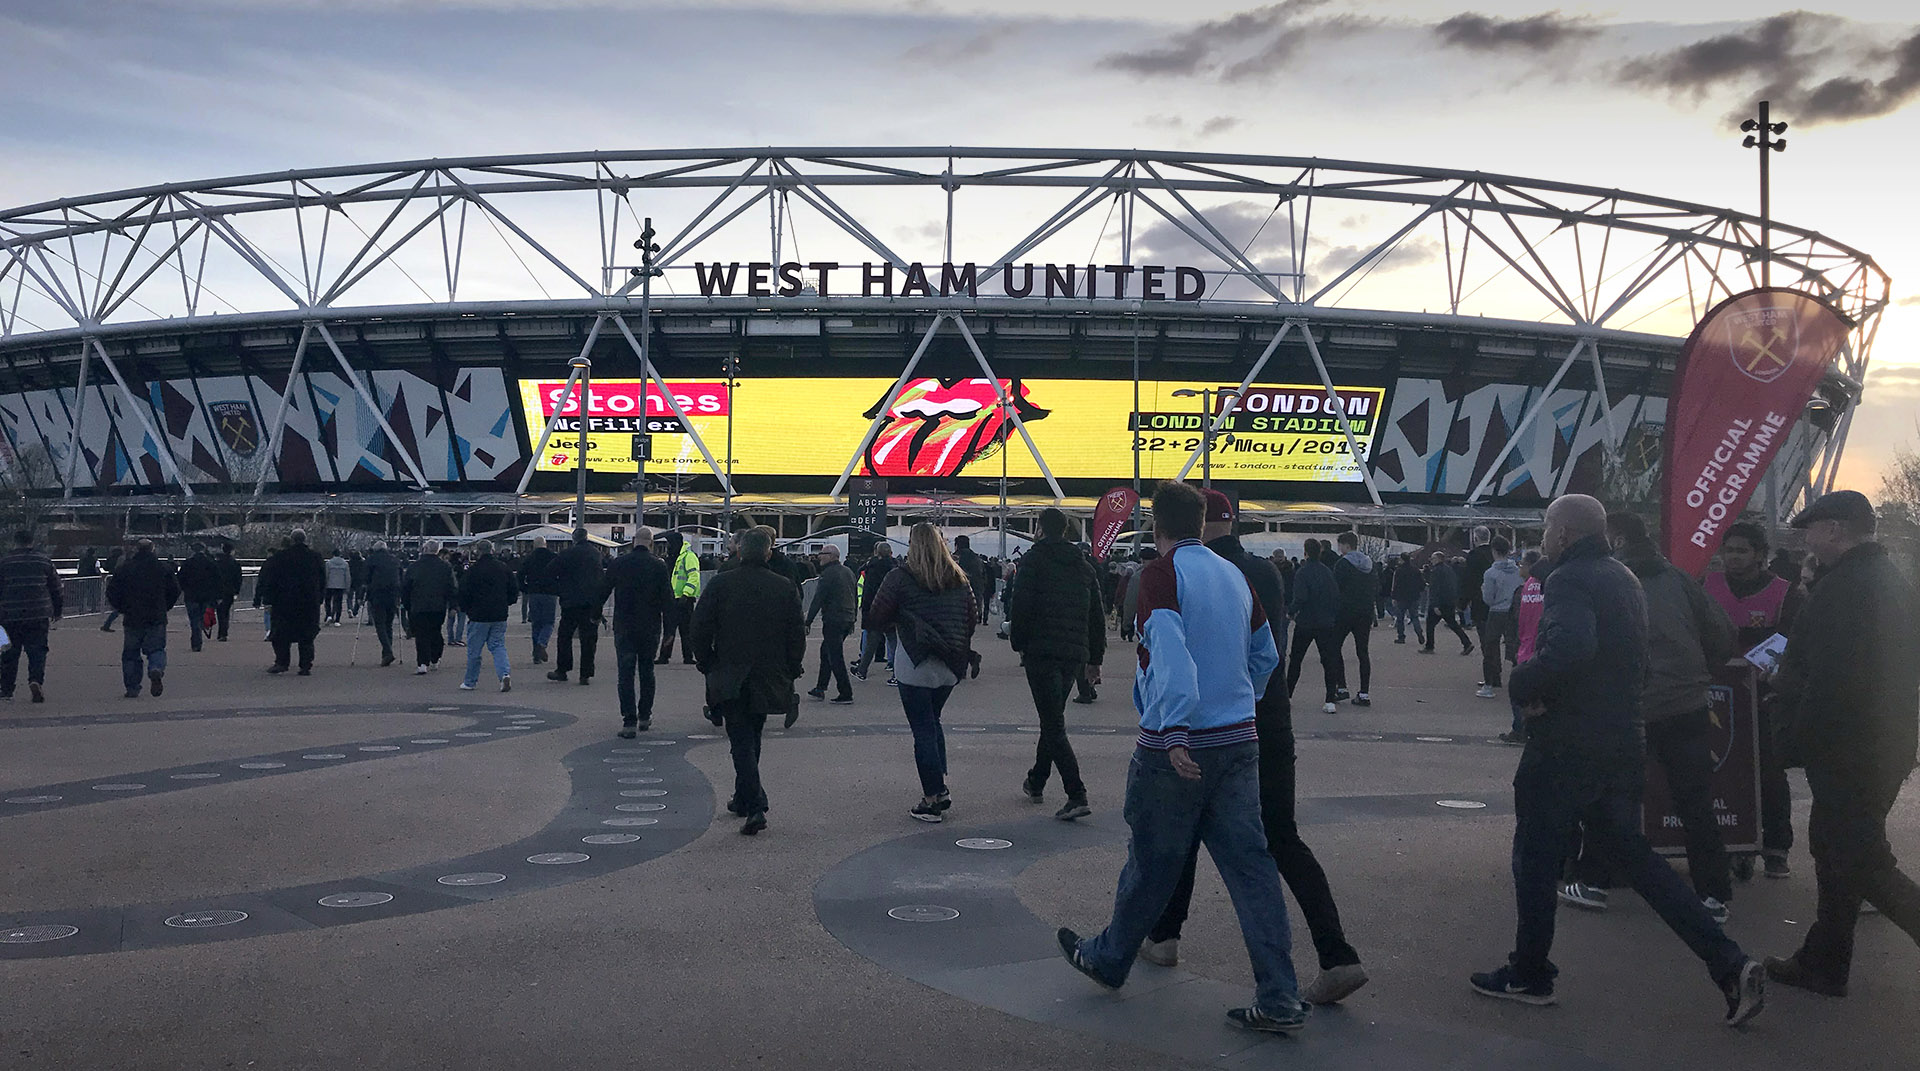 Stones promo in action at London Stadium